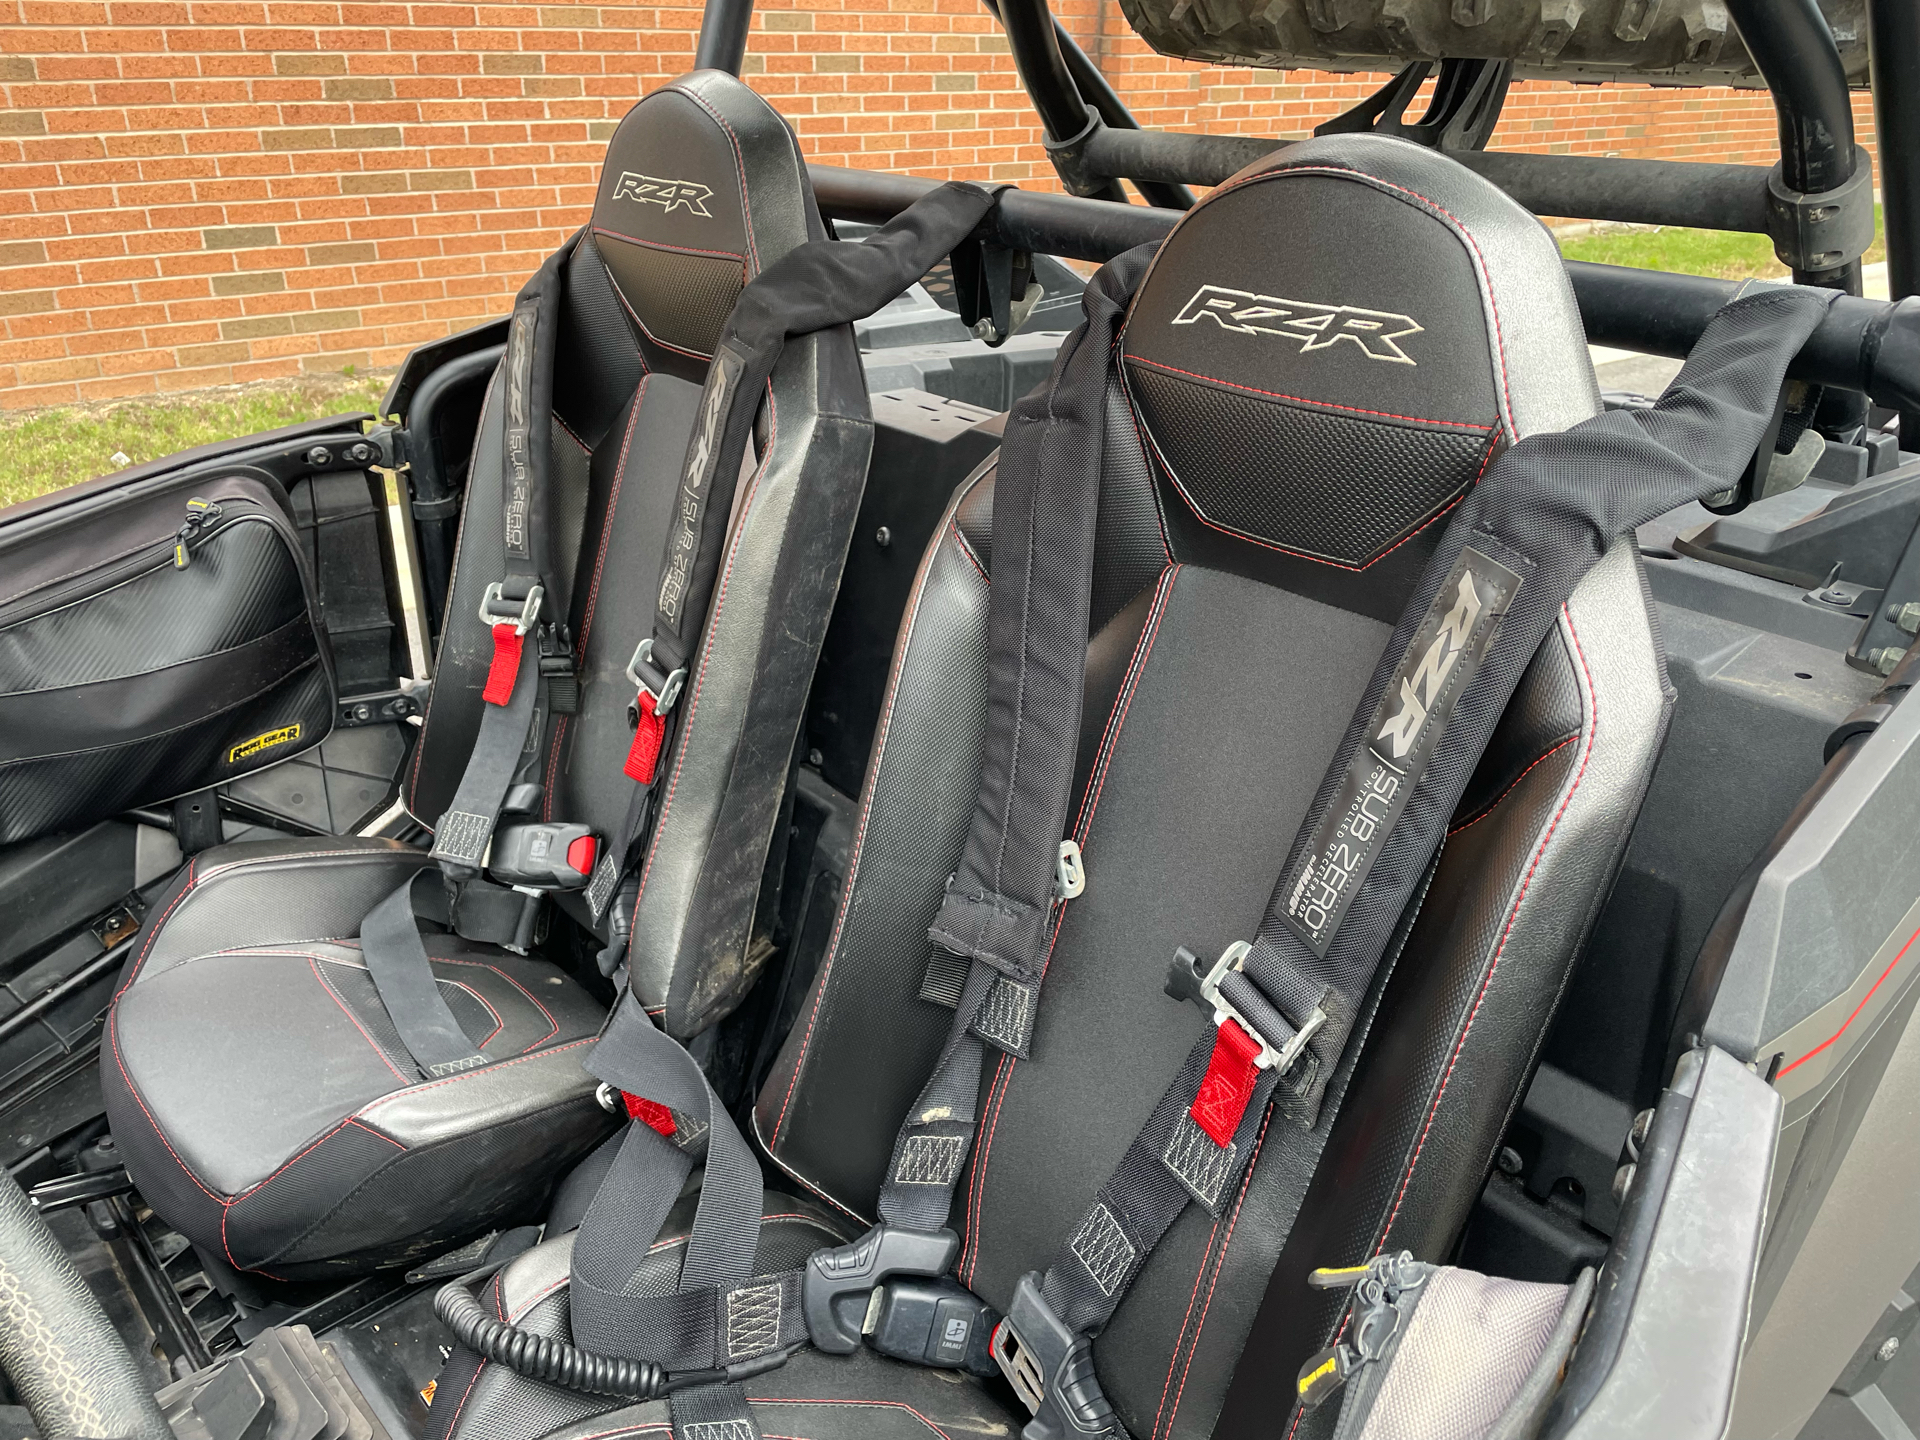 2019 Polaris RZR XP Turbo S in Albemarle, North Carolina - Photo 11